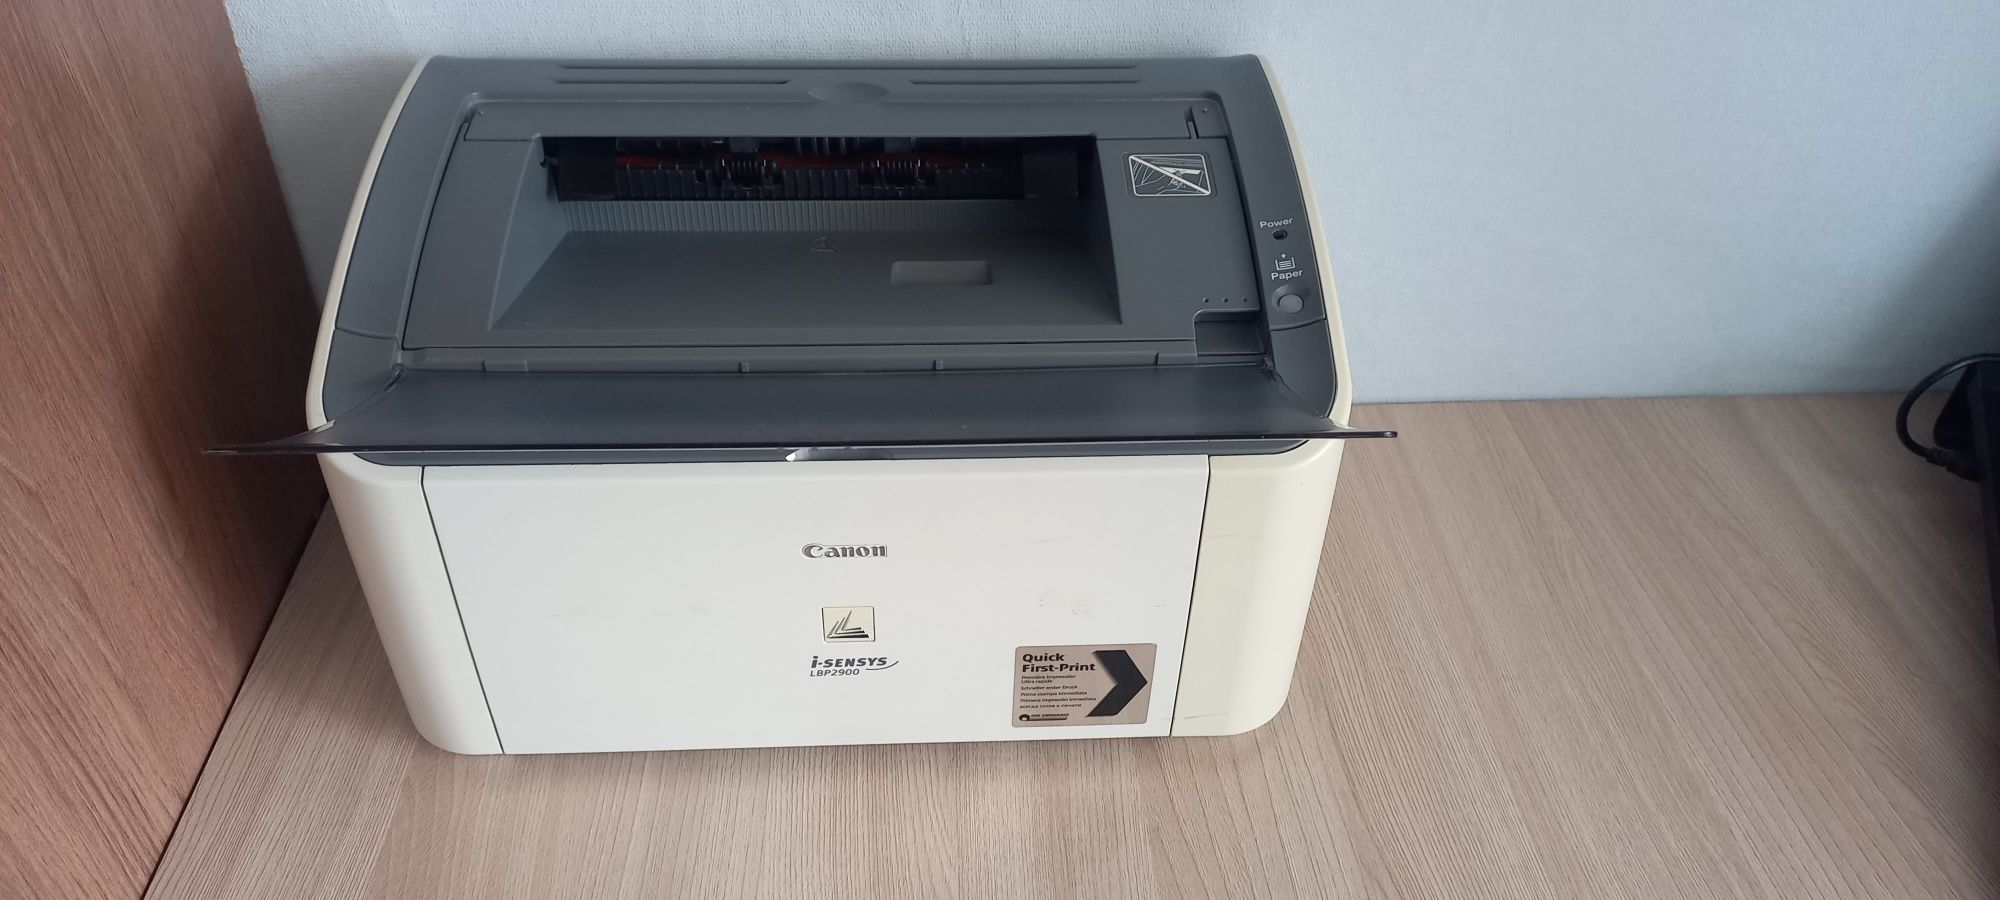 Принтер Canon i-sensys lbp 2900